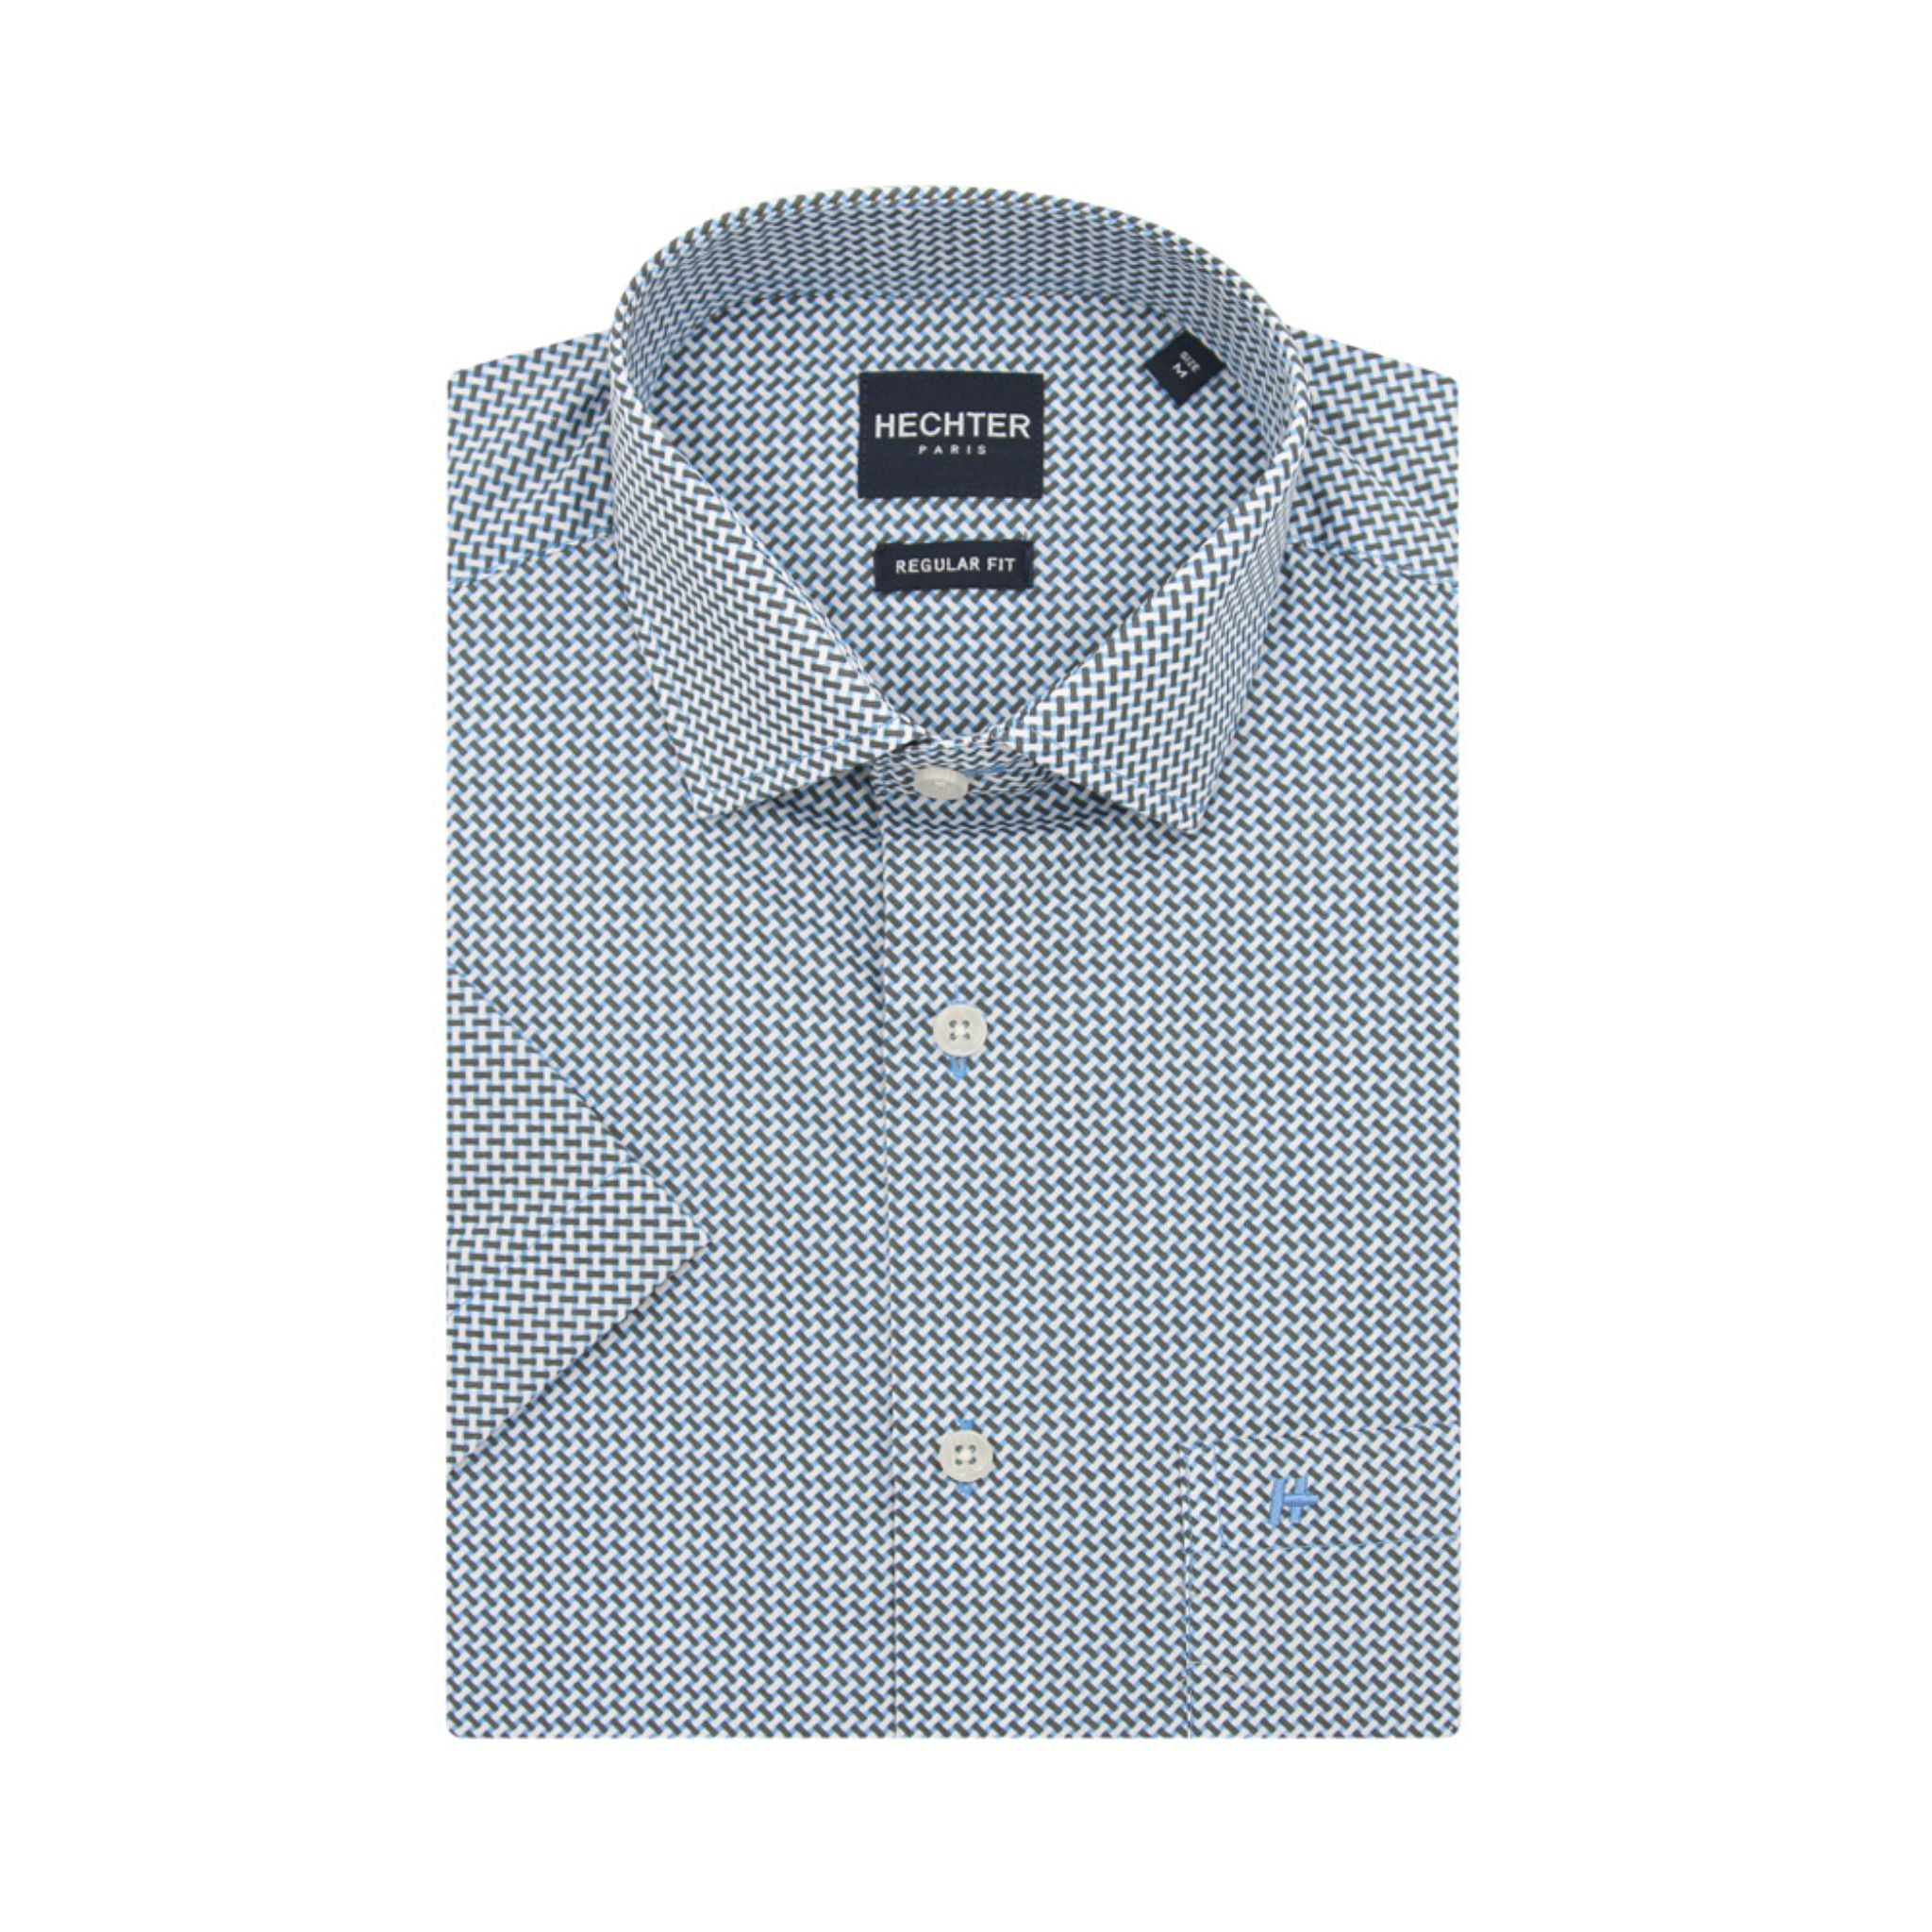 HECHTER Short-Sleeved Shirt - Brown & White Interlace Print